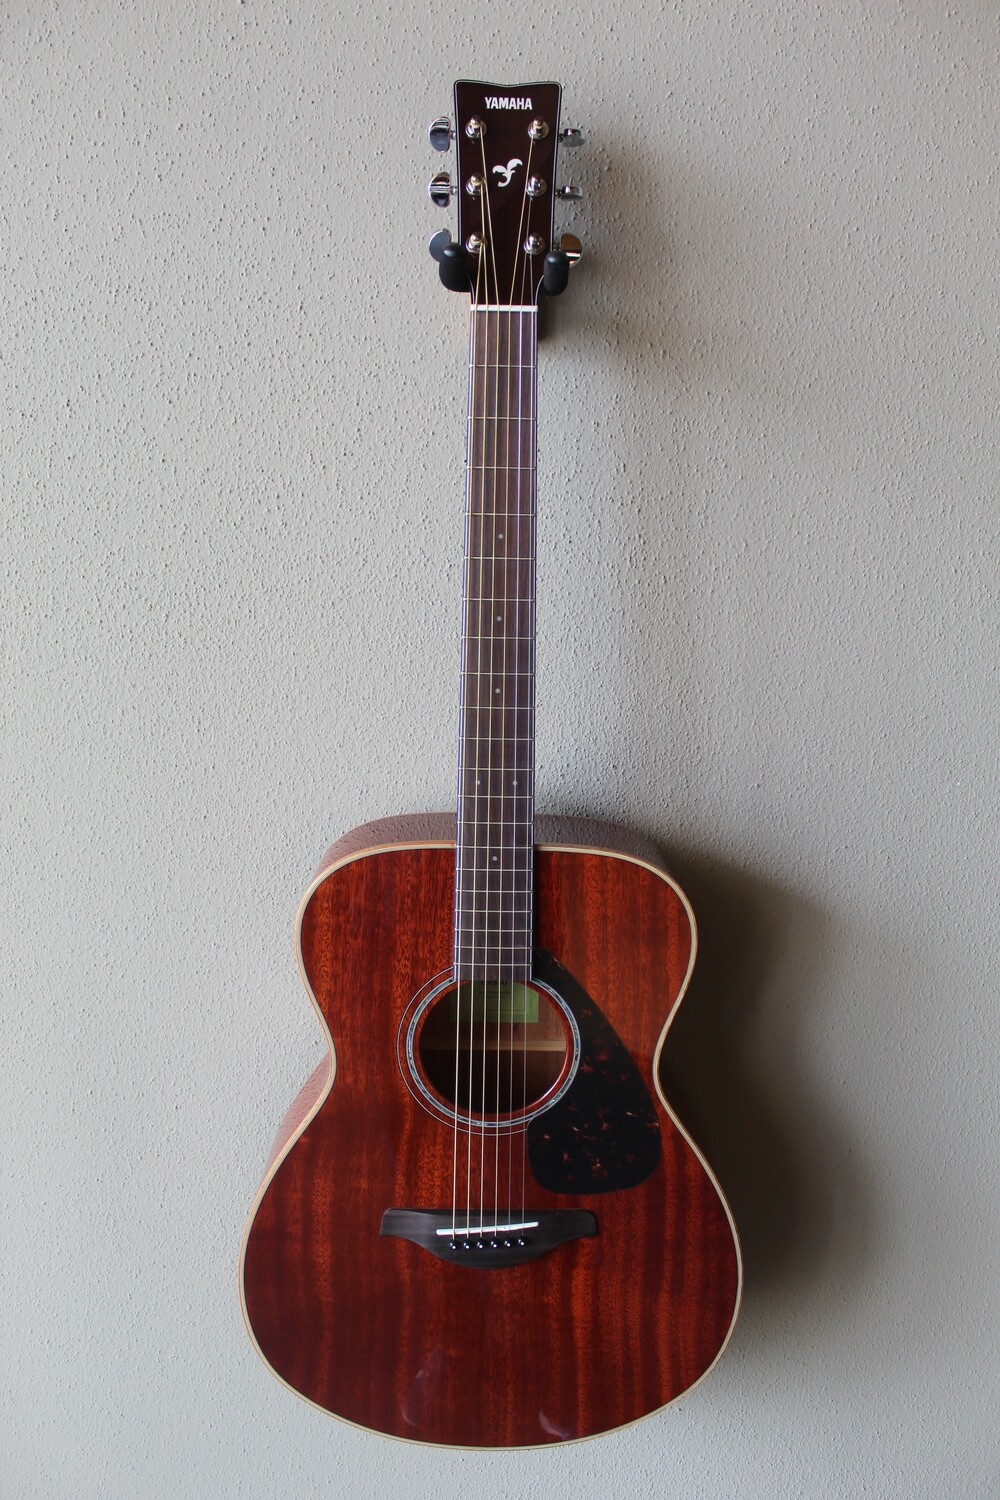 Yamaha FS850 Solid Mahogany Top Concert Acoustic Guitar with Gig Bag